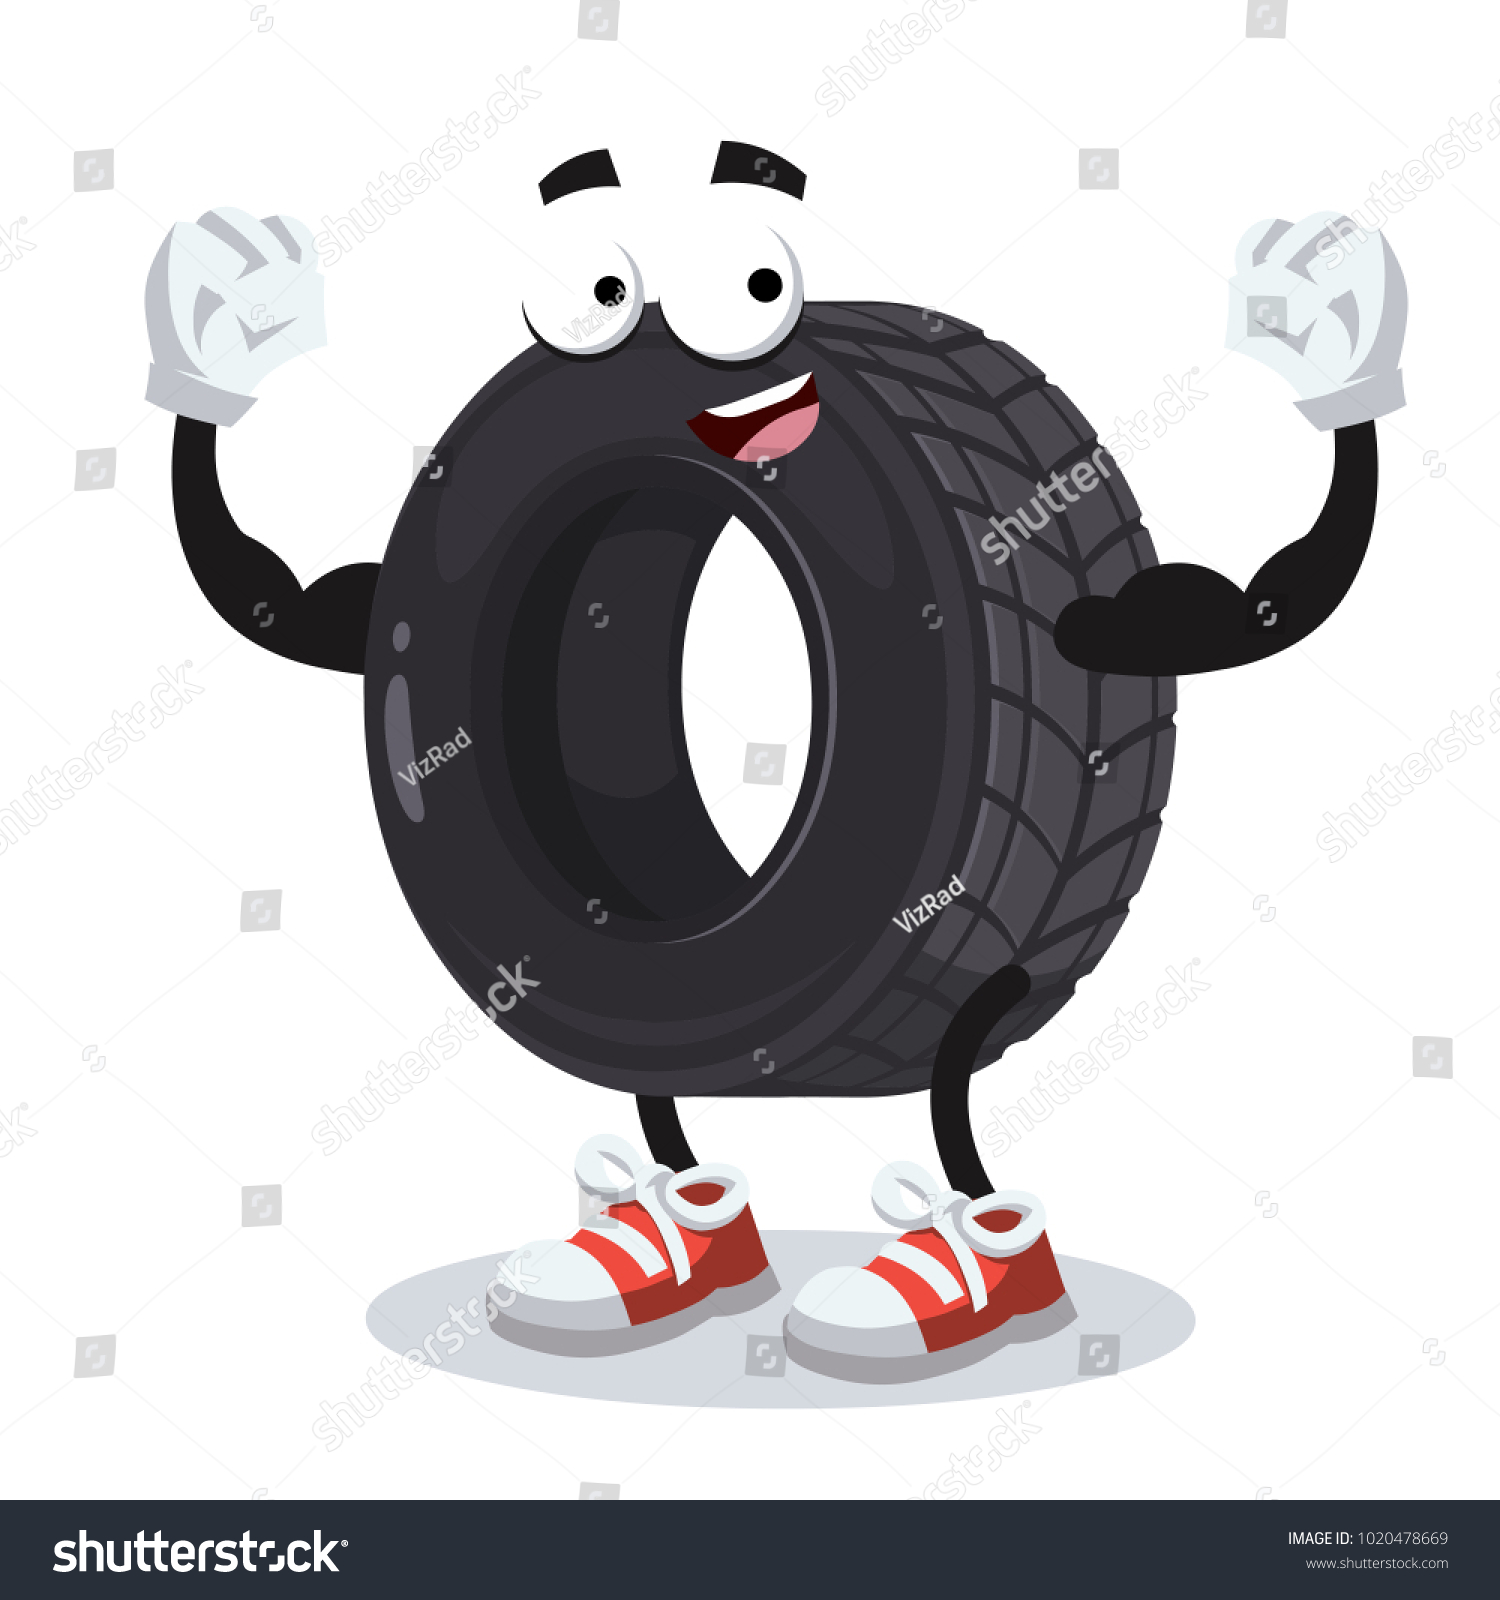 Cartoon Tire Mascot Shows Strength On Stock Vector (Royalty Free ...